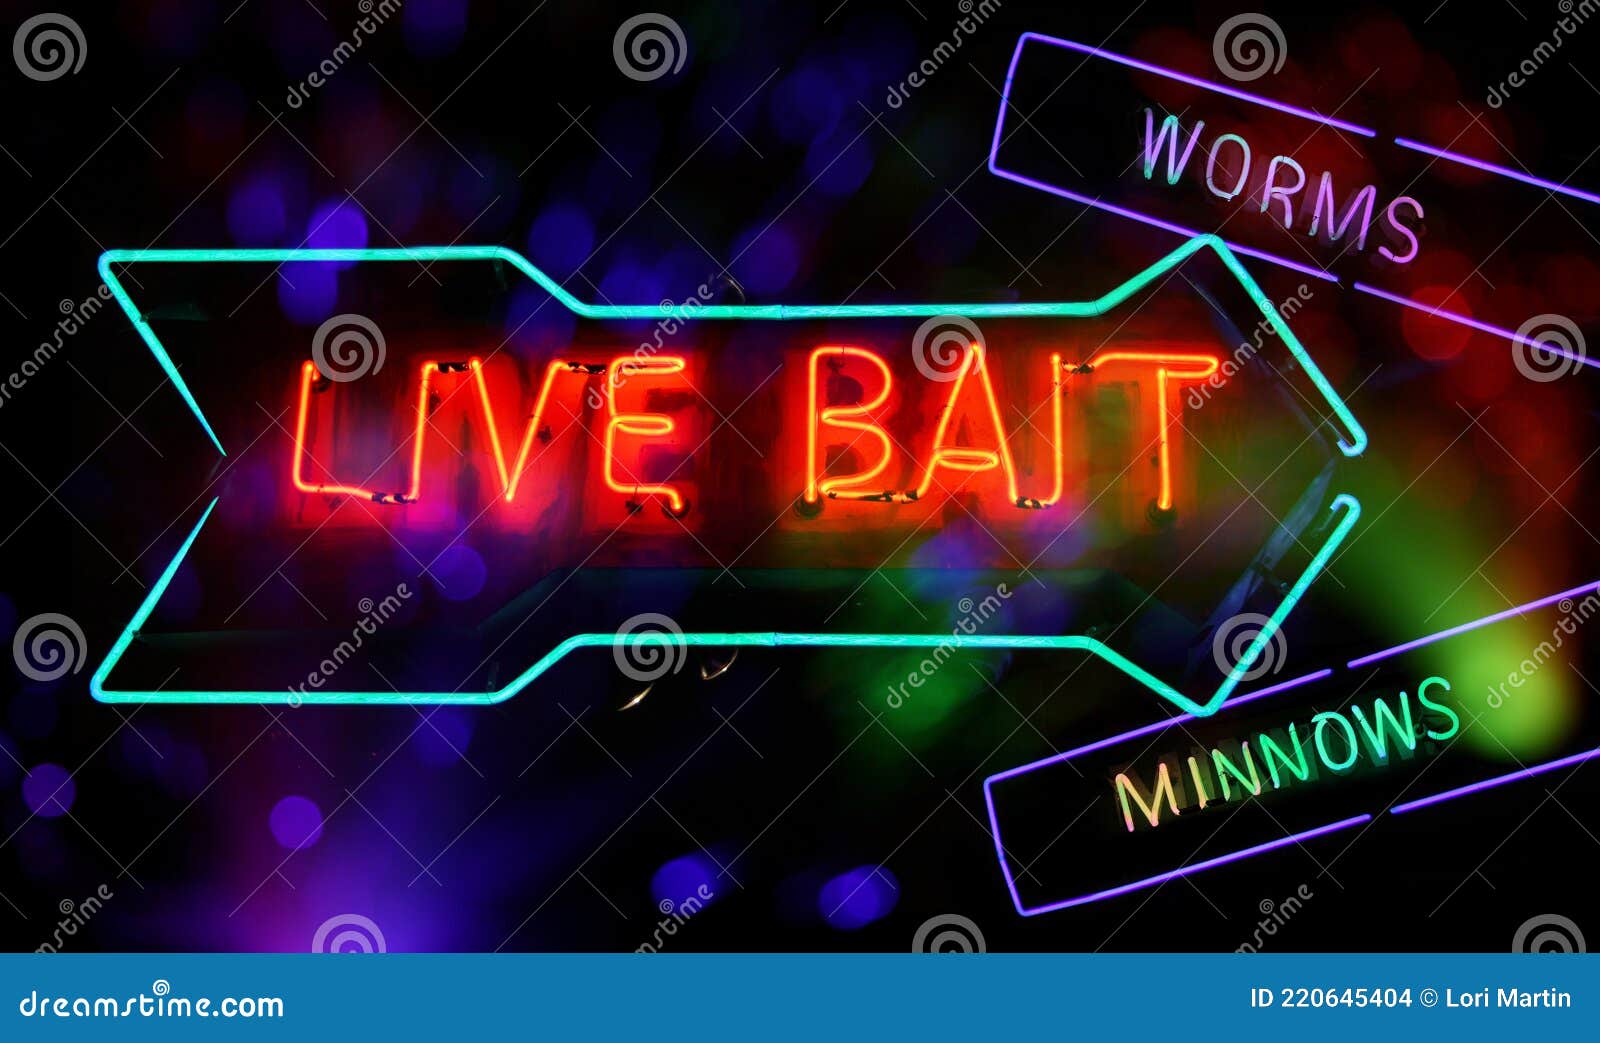 https://thumbs.dreamstime.com/z/neon-sign-composite-image-live-bait-worms-minnows-220645404.jpg